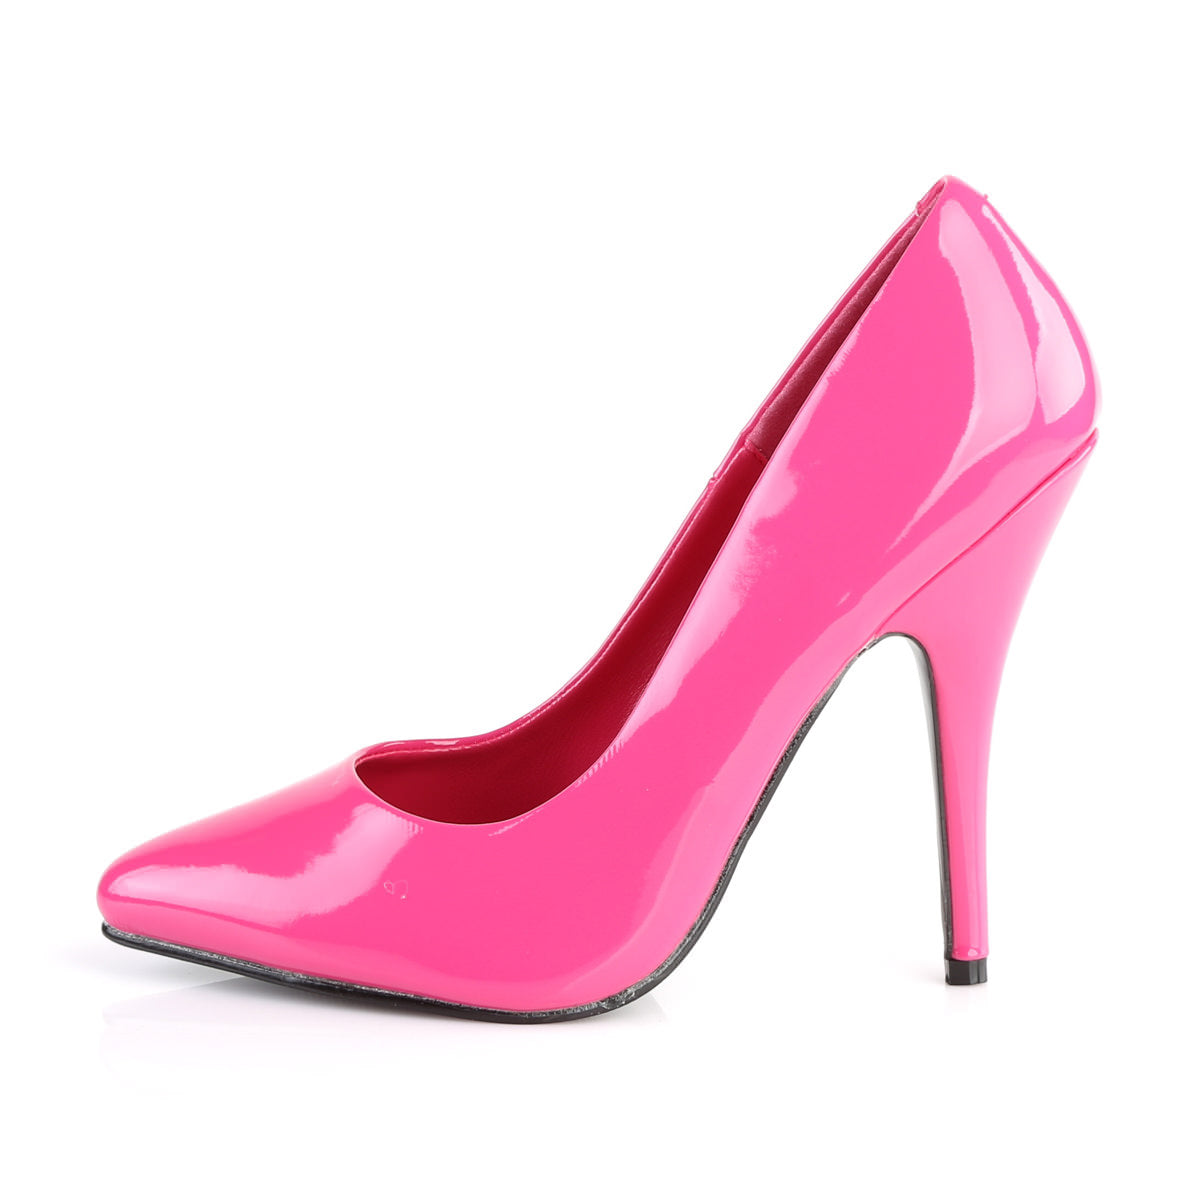 5 Inch Heel SEDUCE-420 Hot Pink Patent